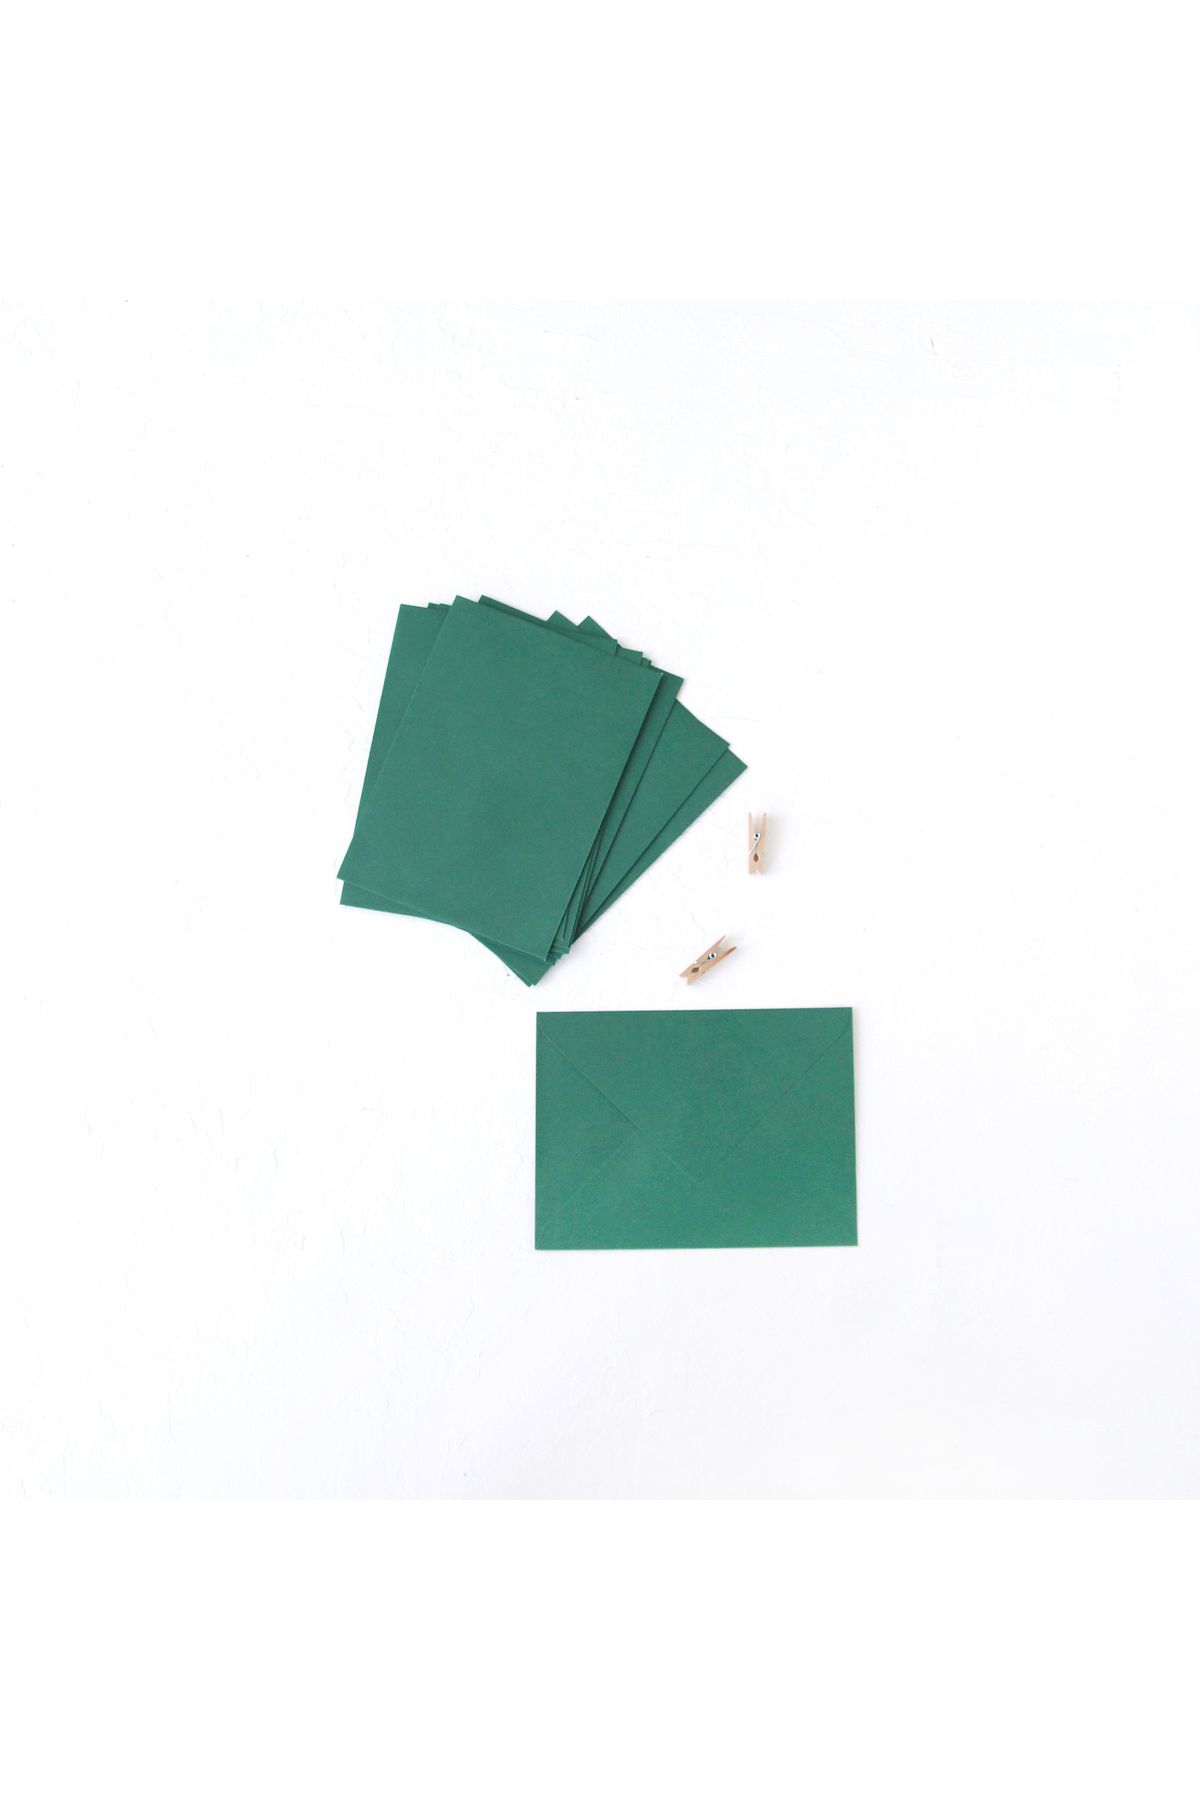 Bimotif Koyu yeşil standart zarf, 13x18 cm 25 adet